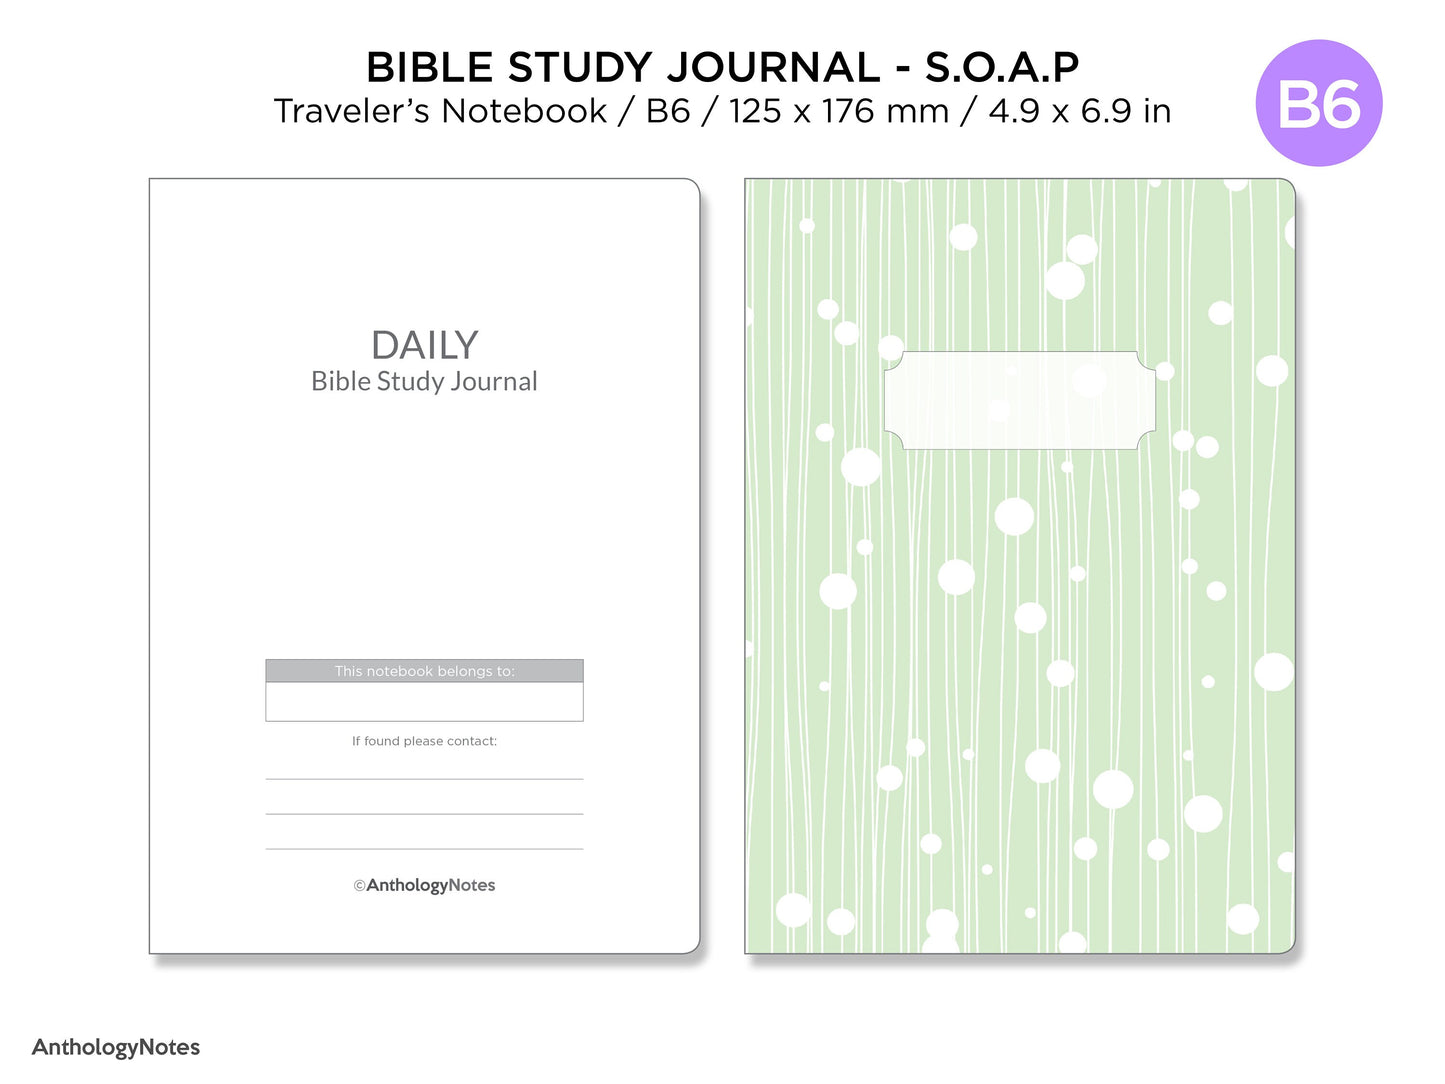 B6 Daily Study Bible Journal S.O.A.P Traveler's Notebook Insert GRID Minimalist Devotional Planner